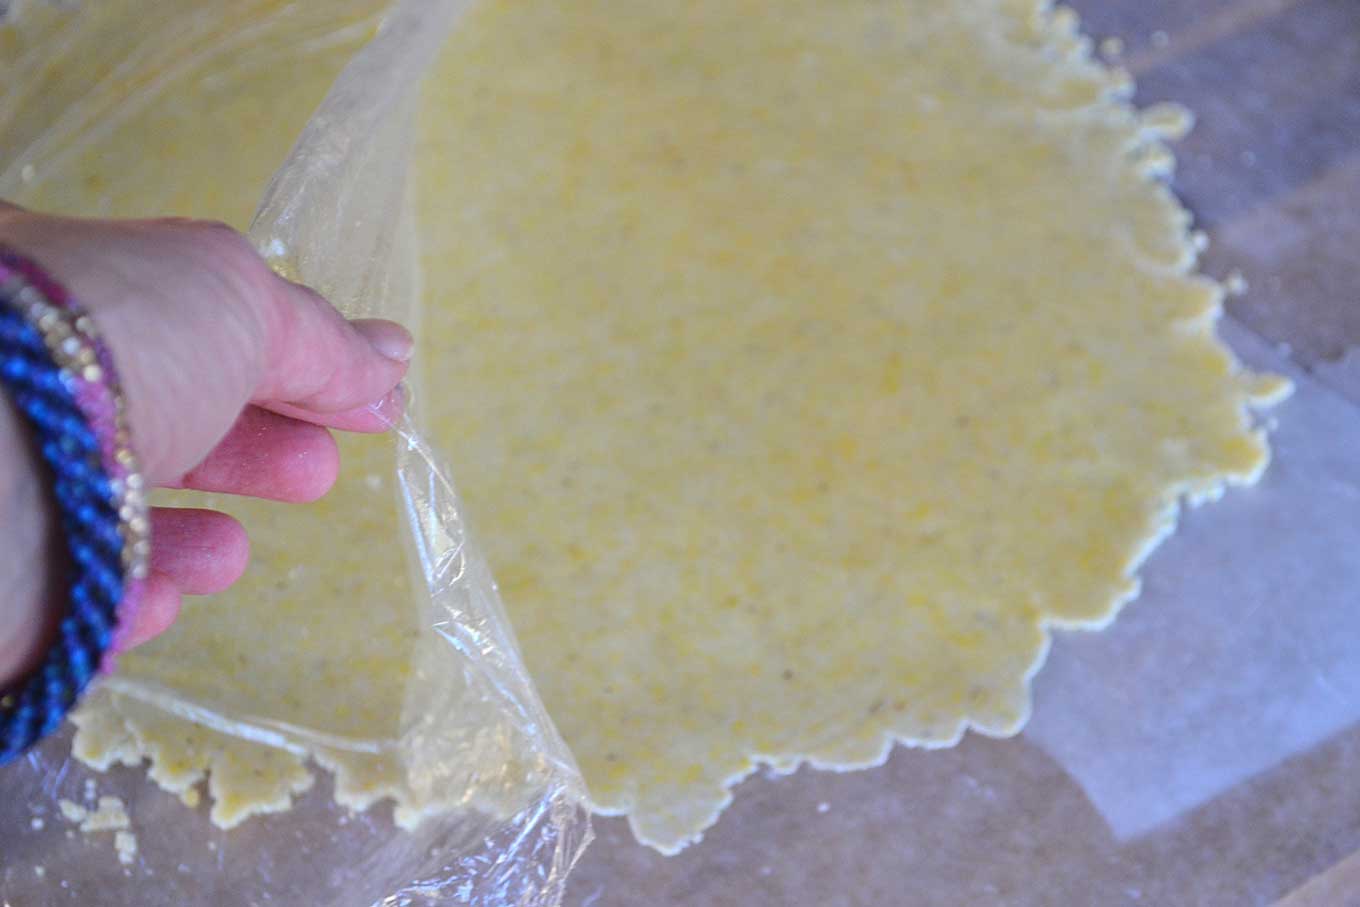 how to make a sweet cornmeal crust | rusticplate.com